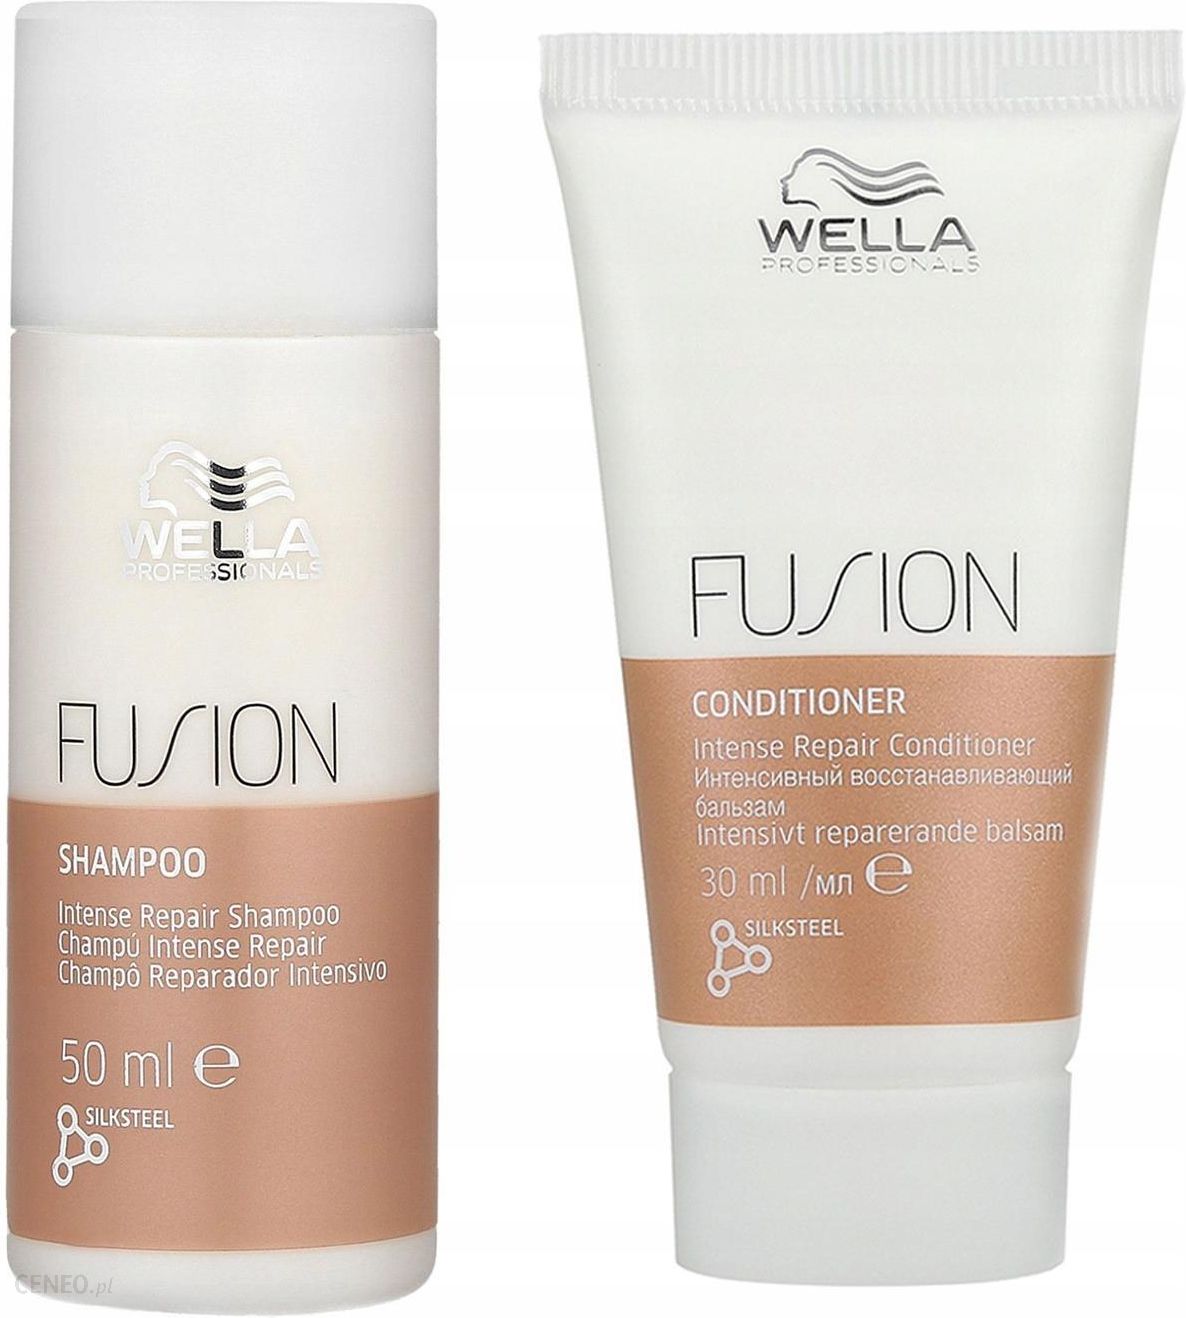 wella fusion szampon ceneo